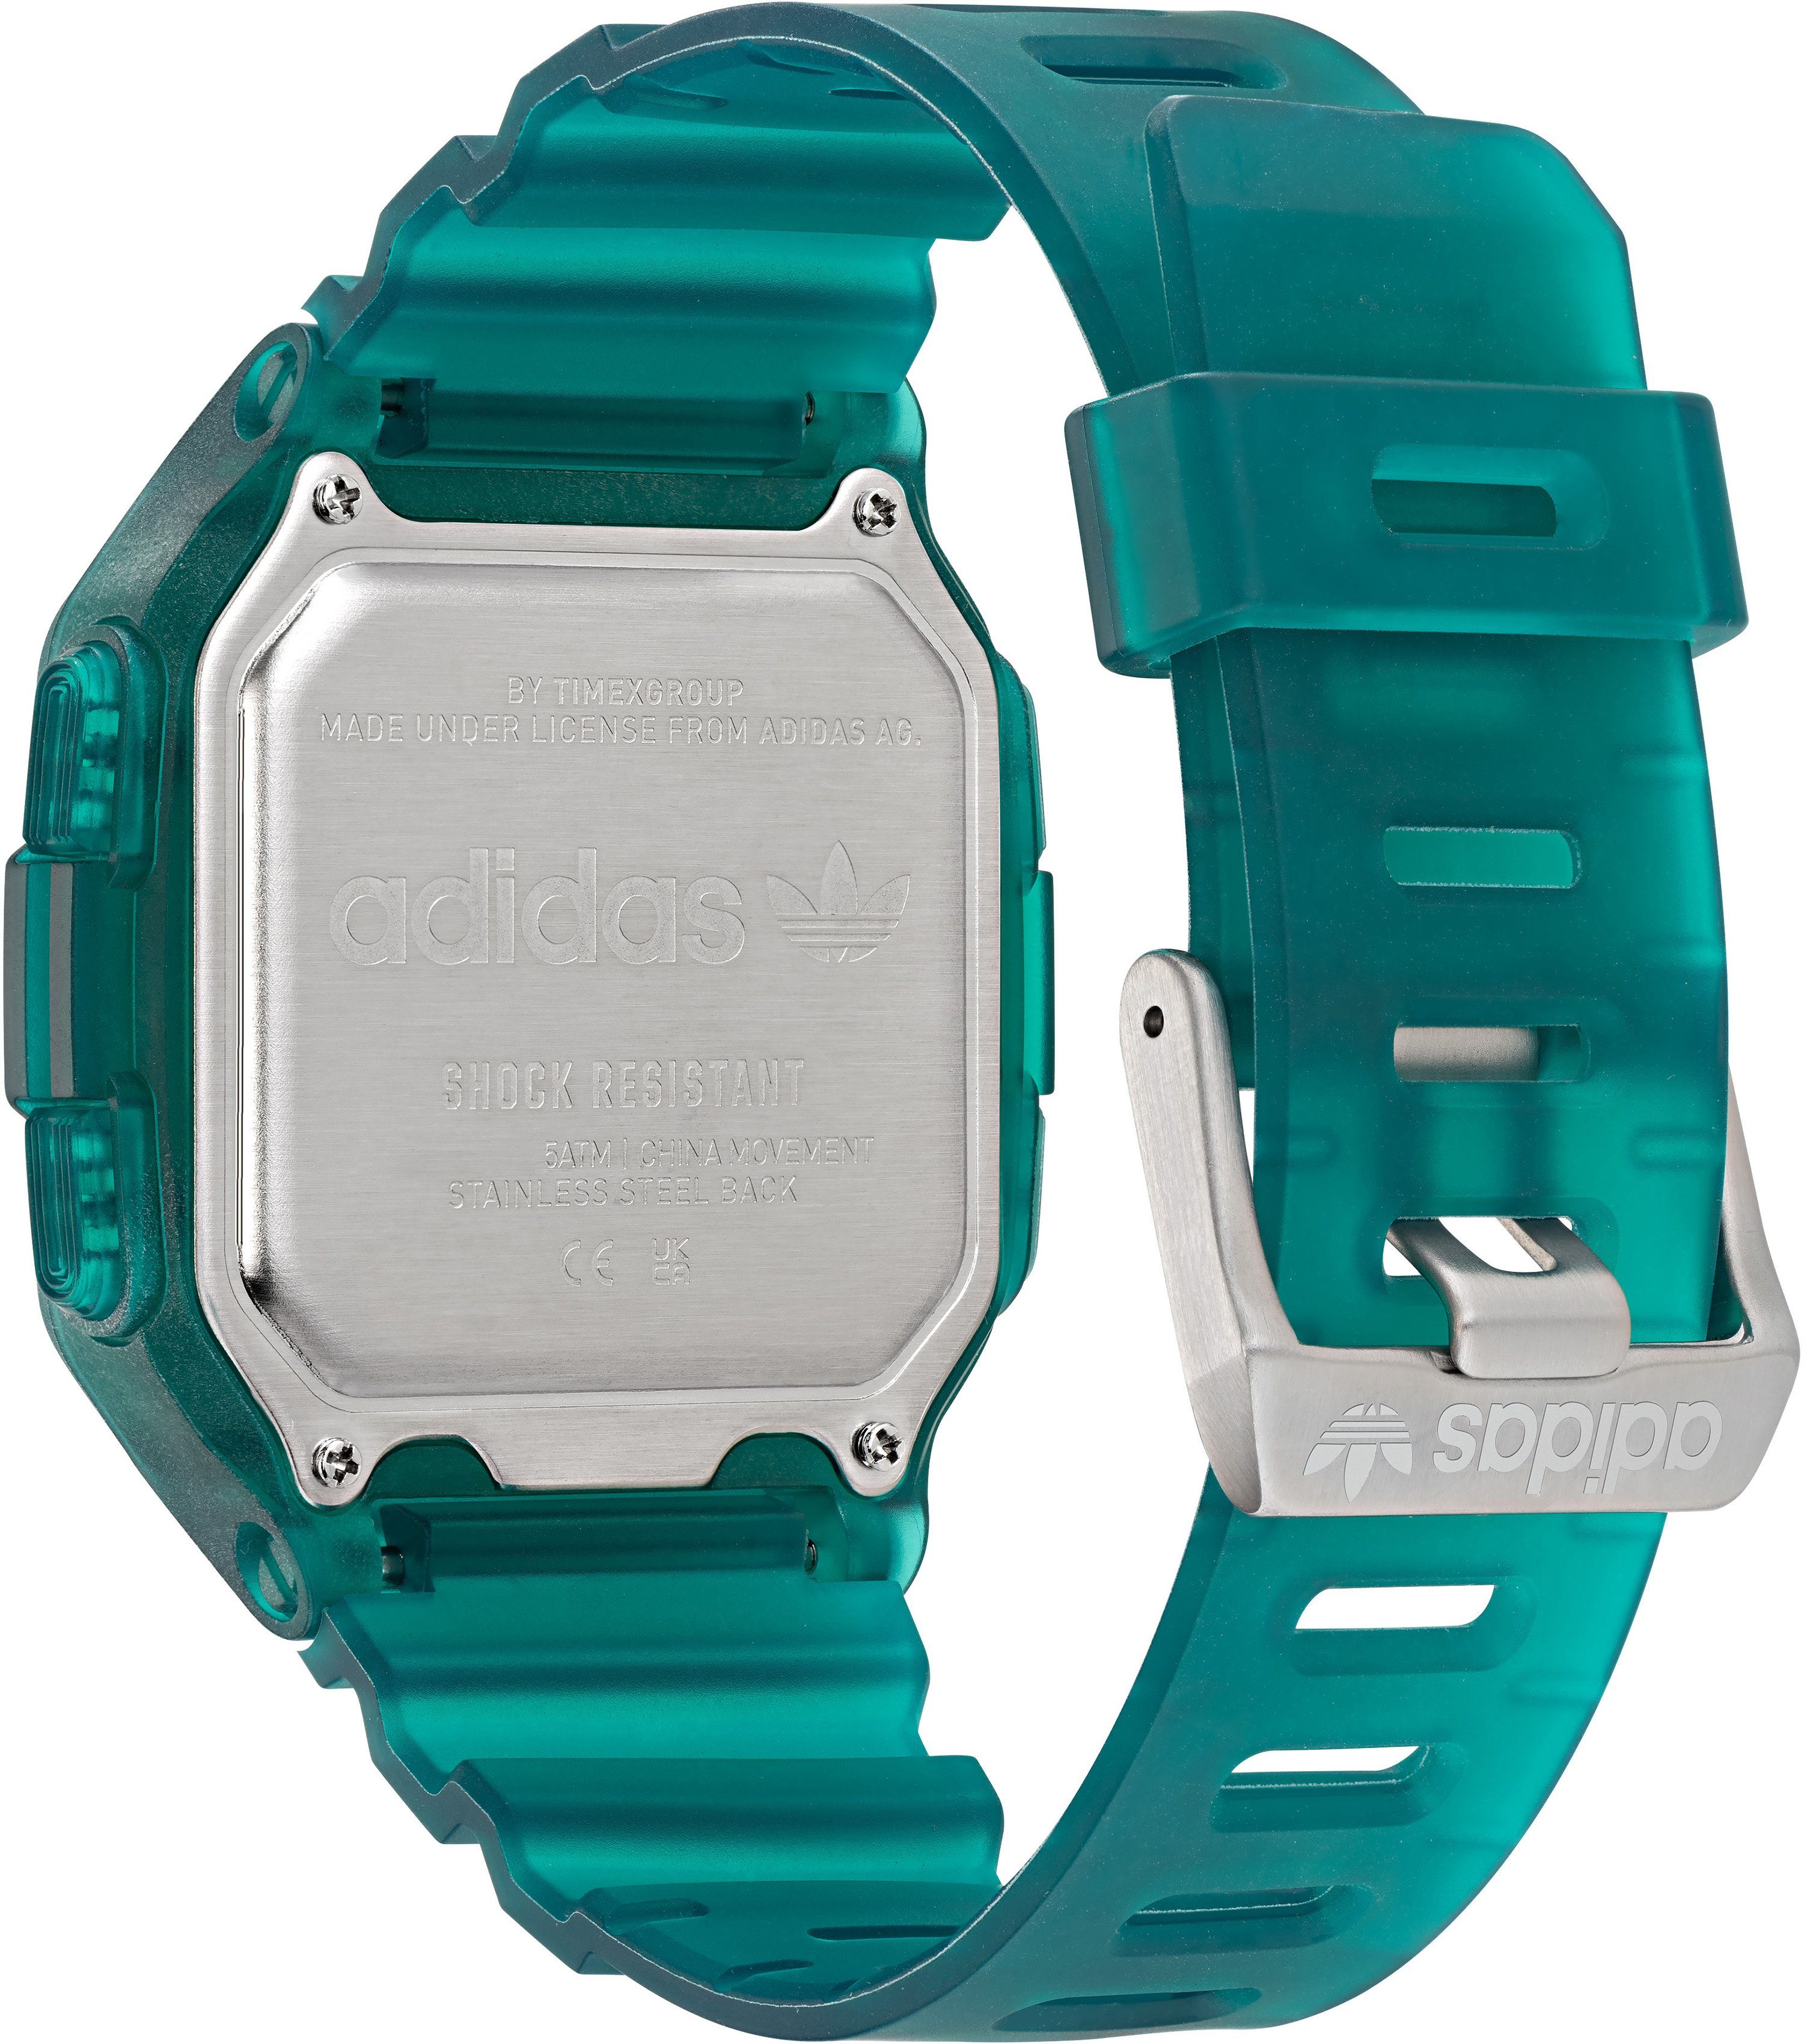 Collegiate Originals Green GMT, adidas Digitaluhr AOST220482I ONE DIGITAL